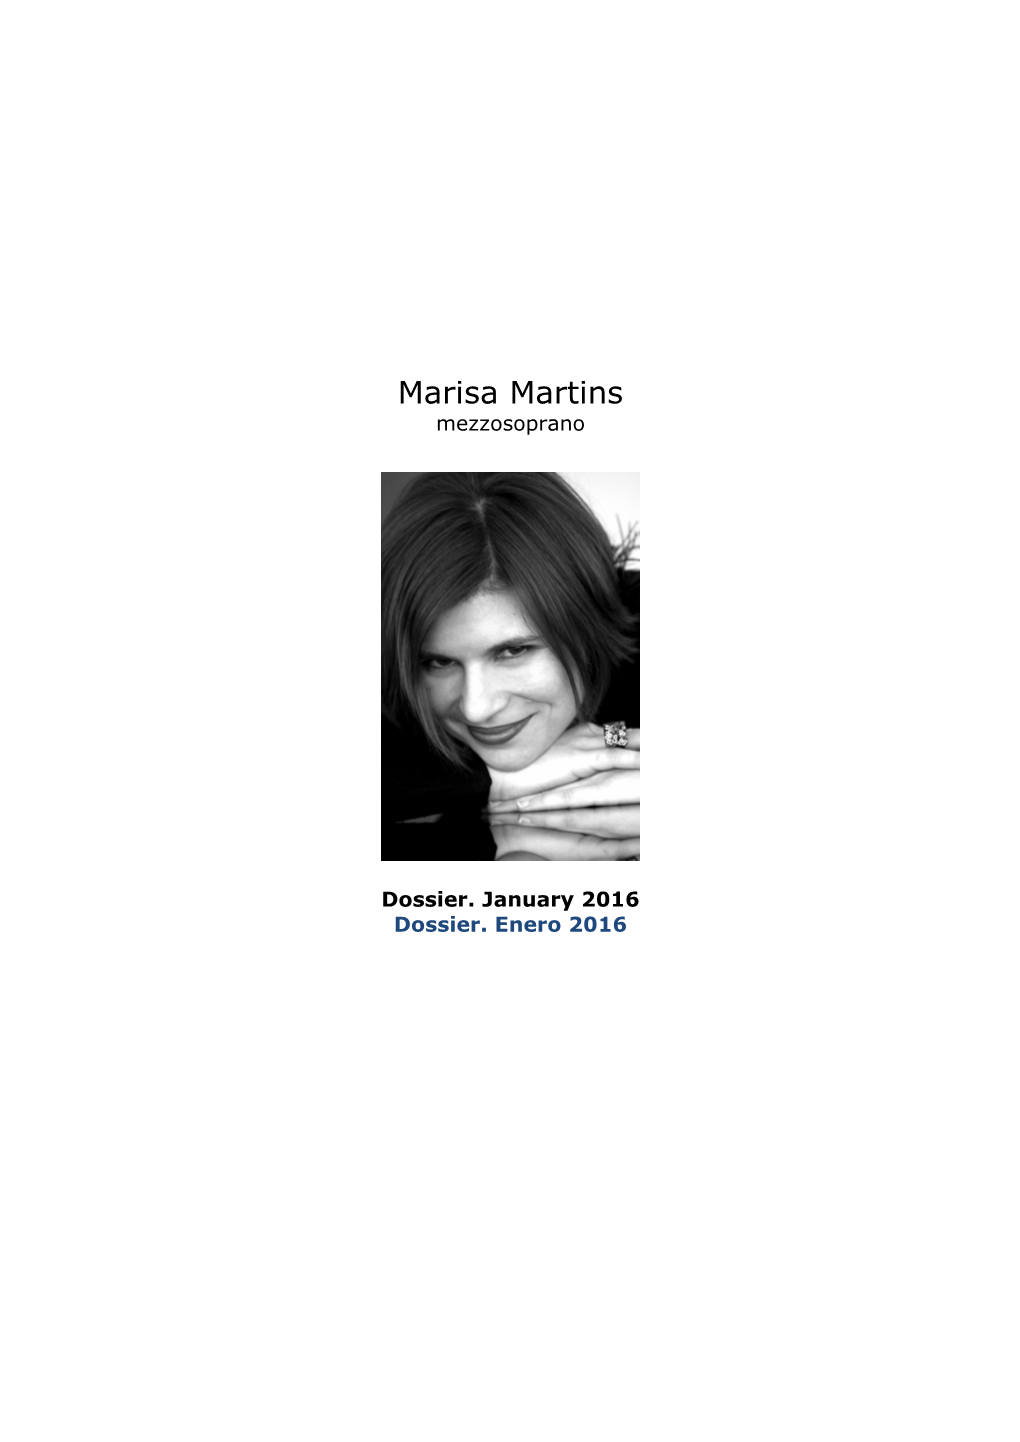 Marisa Martins Mezzosoprano